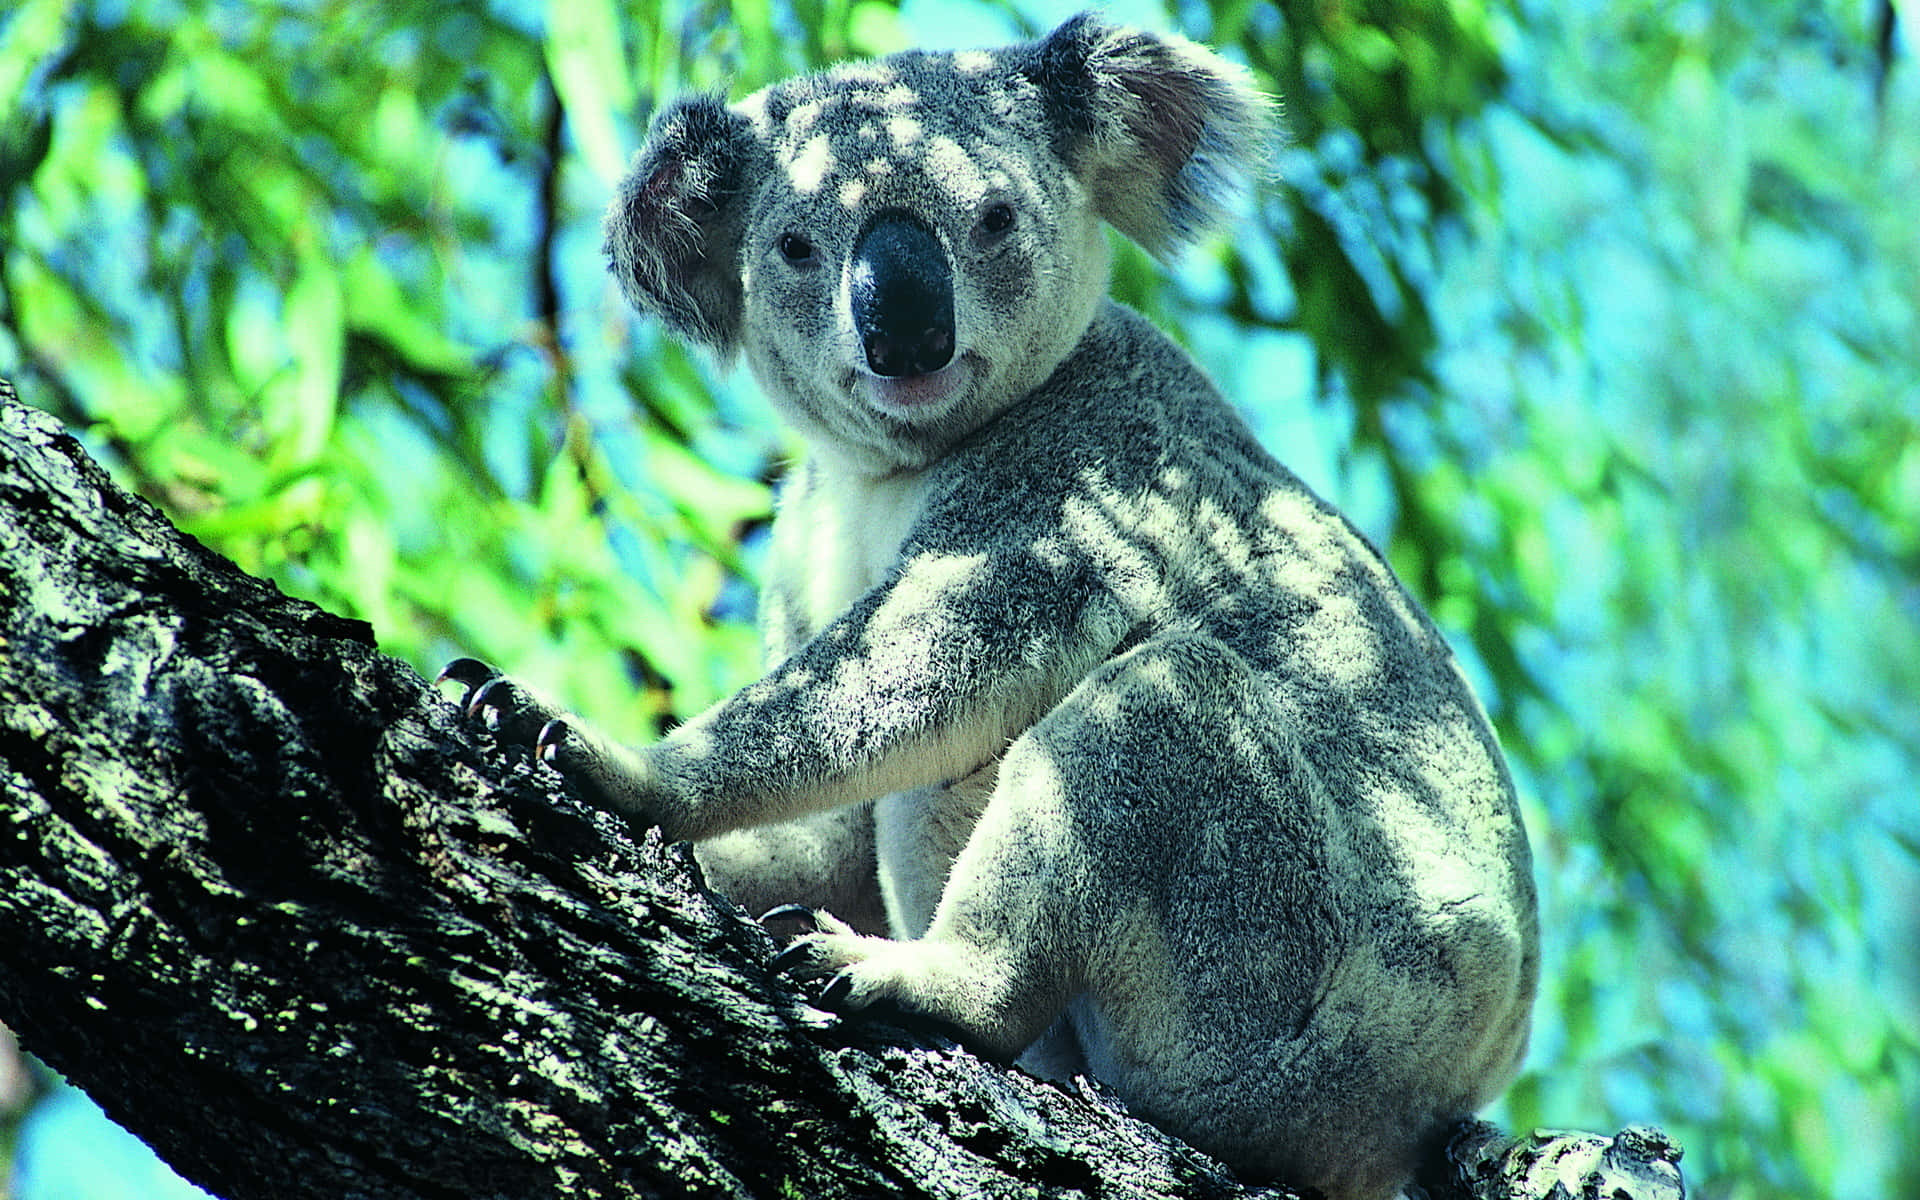 'A cute Koala dreams of a blissful life in the wild'